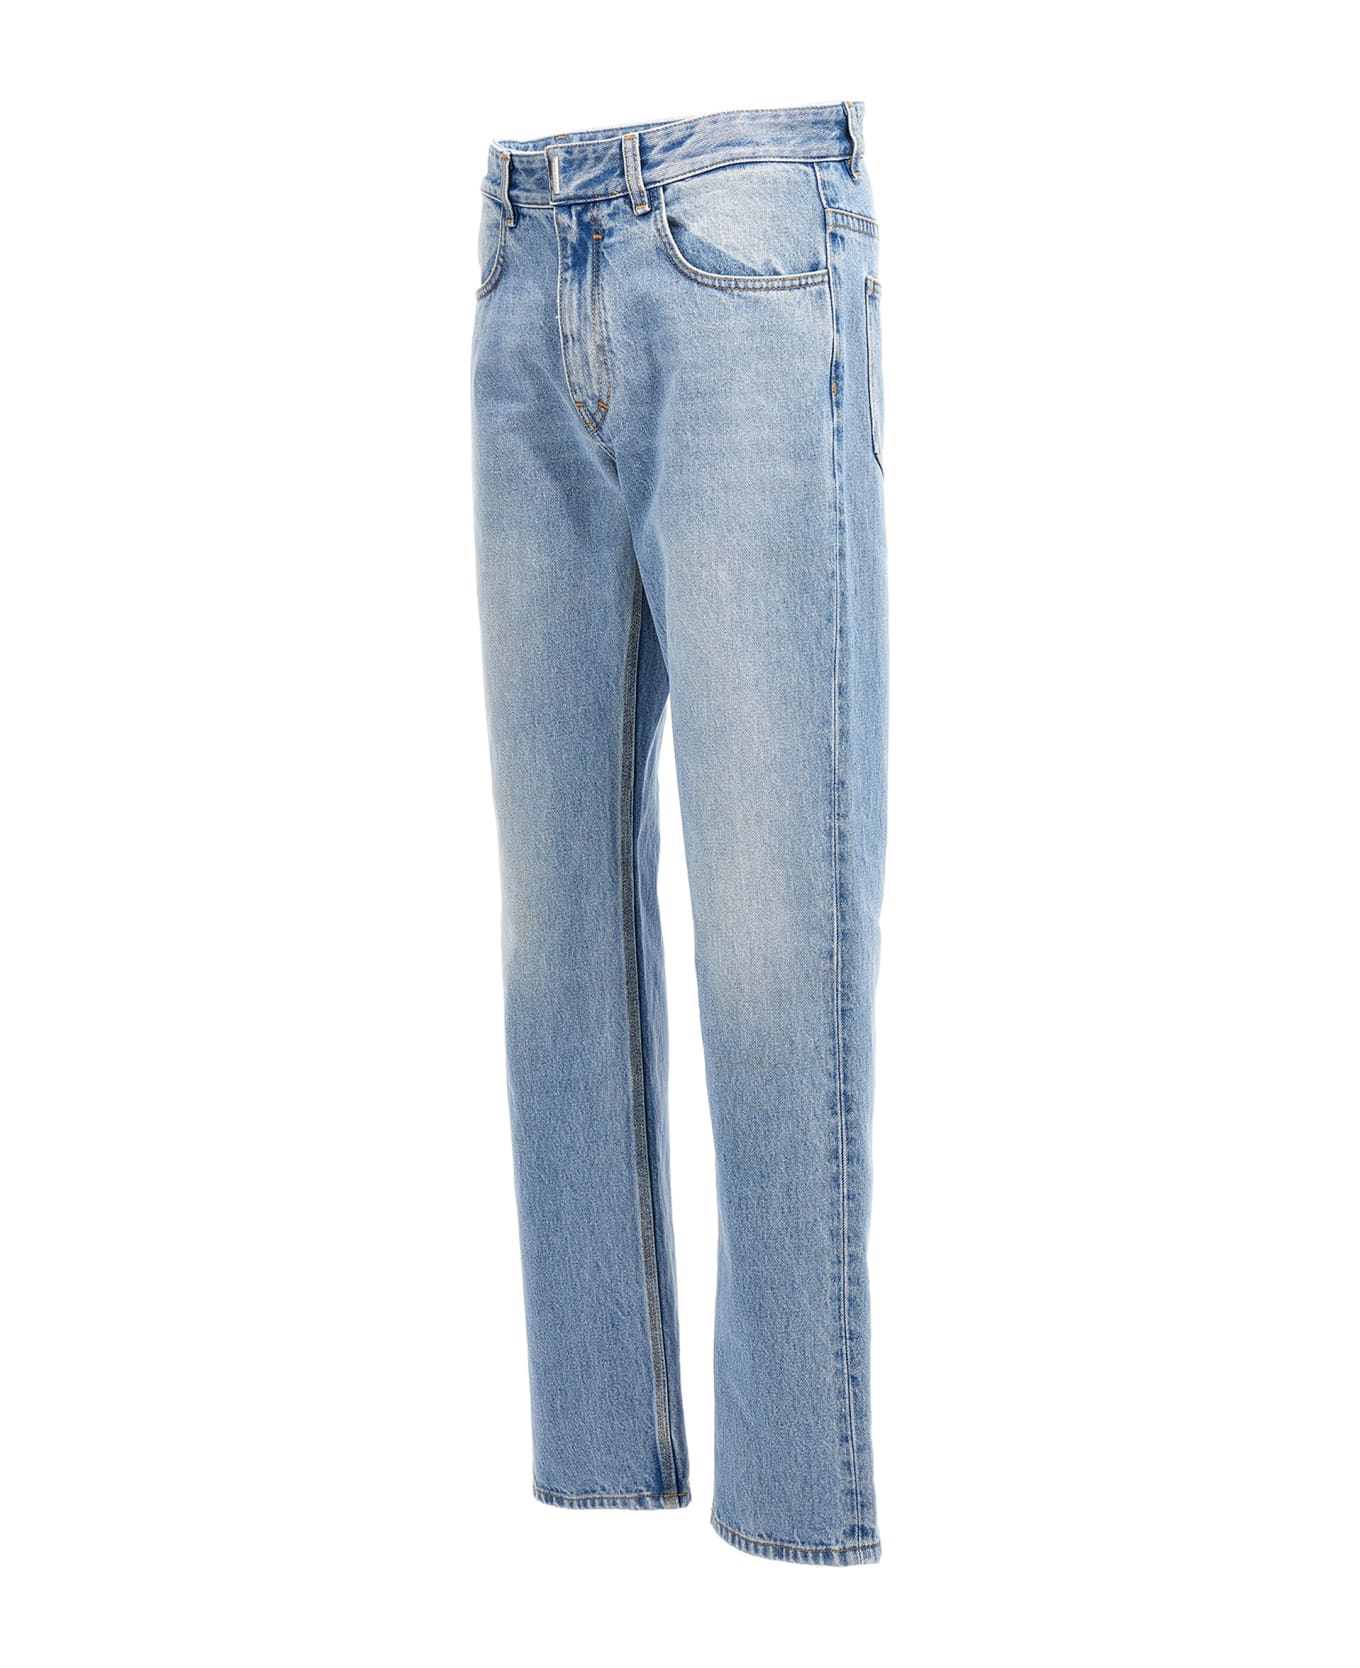 Givenchy Denim Jeans - LIGHT BLUE